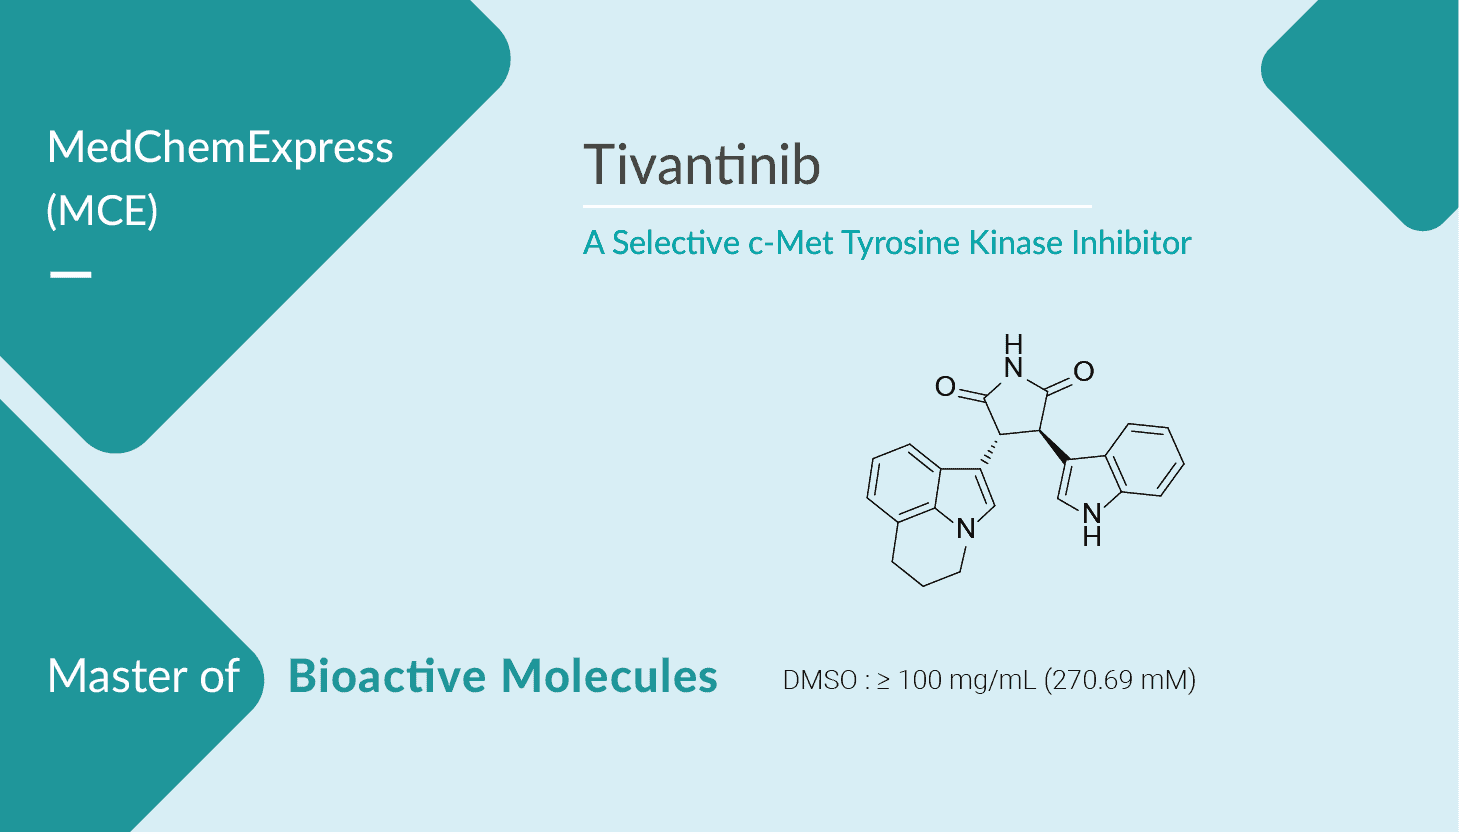 Tivantinib 03 - Tivantinib is a Selective c-Met Tyrosine Kinase Inhibitor